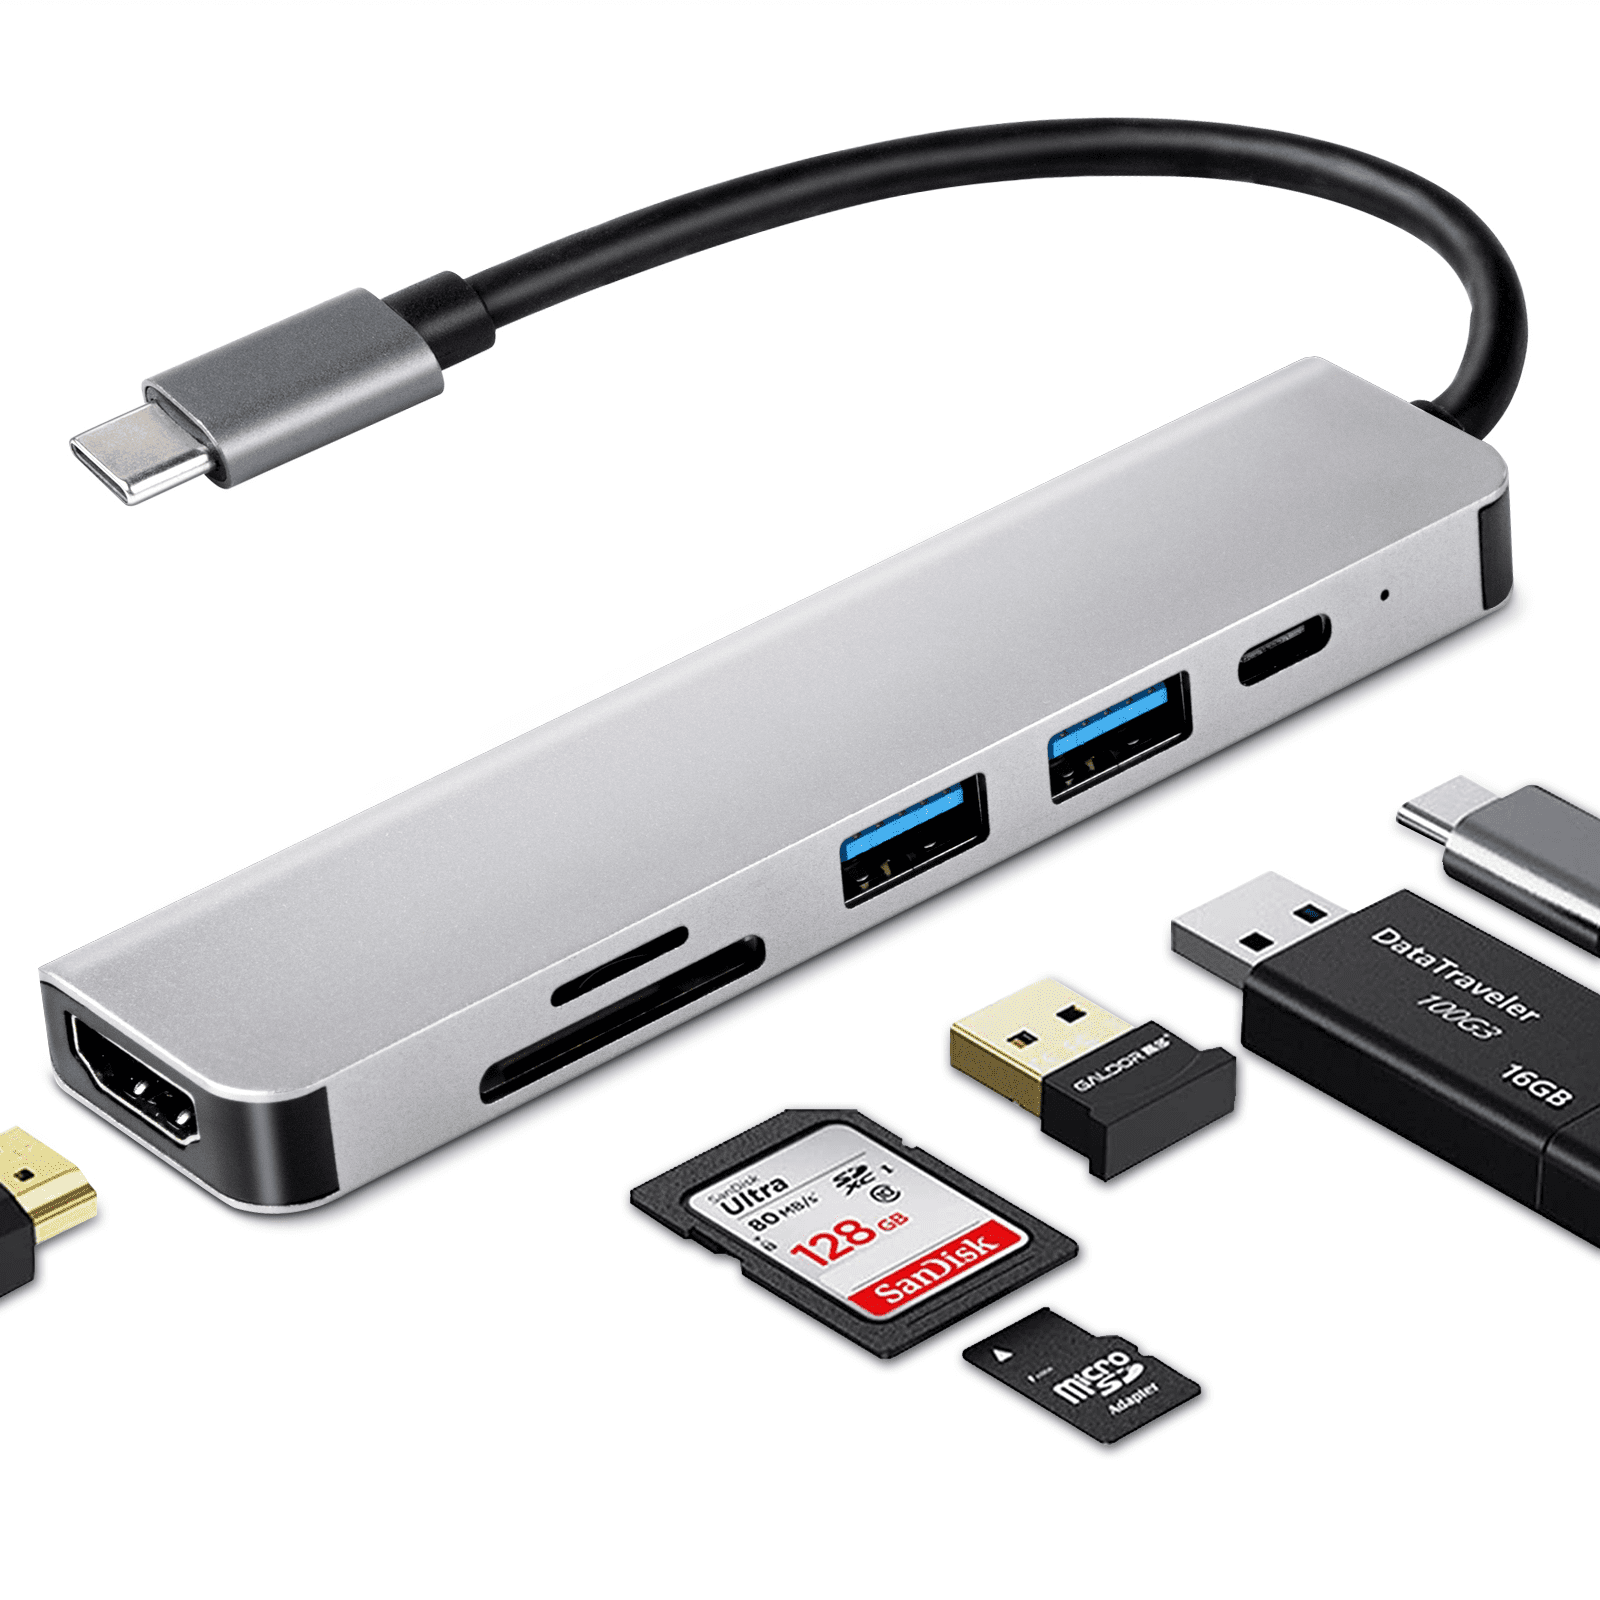 BENFEI 2 Pack USB 3.0 Hub 4-Port, Ultra-Slim USB 3.0 Hub